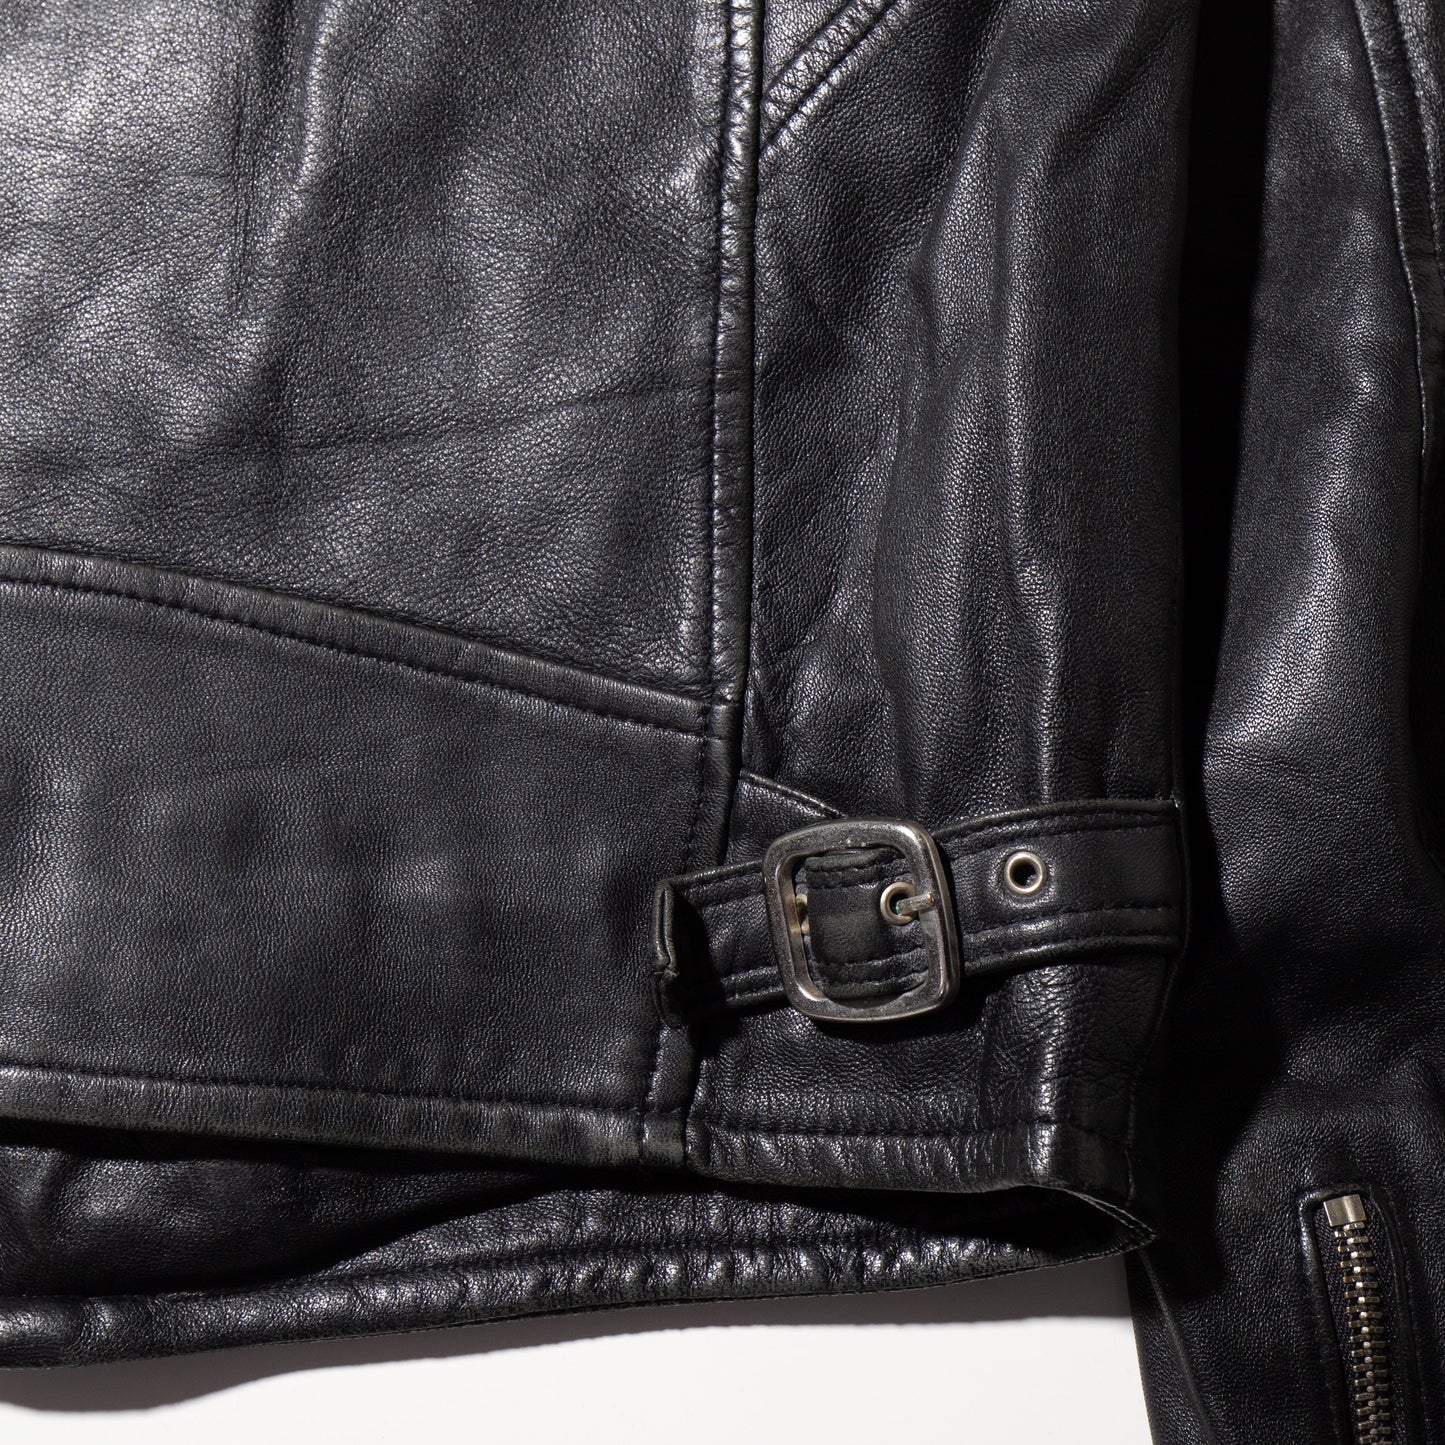 vintage schott riders leather jacket